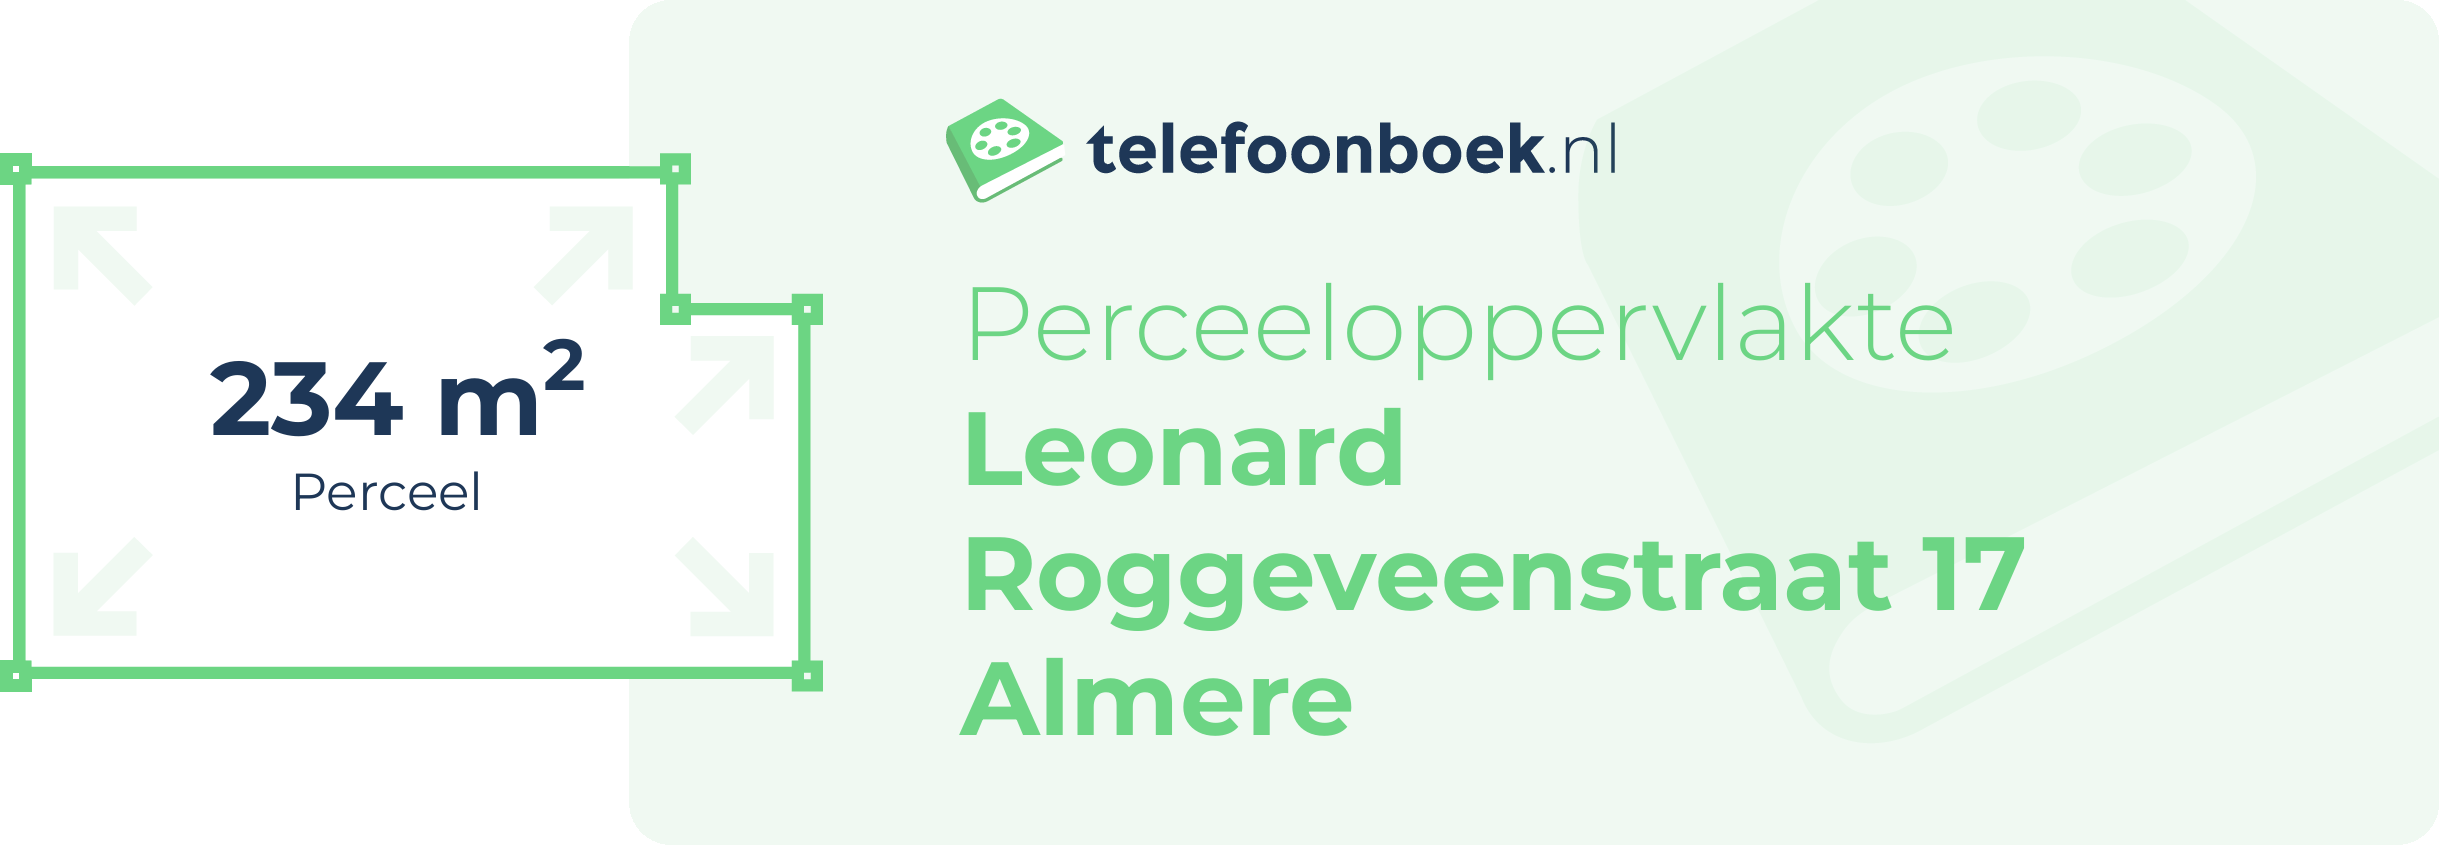 Perceeloppervlakte Leonard Roggeveenstraat 17 Almere